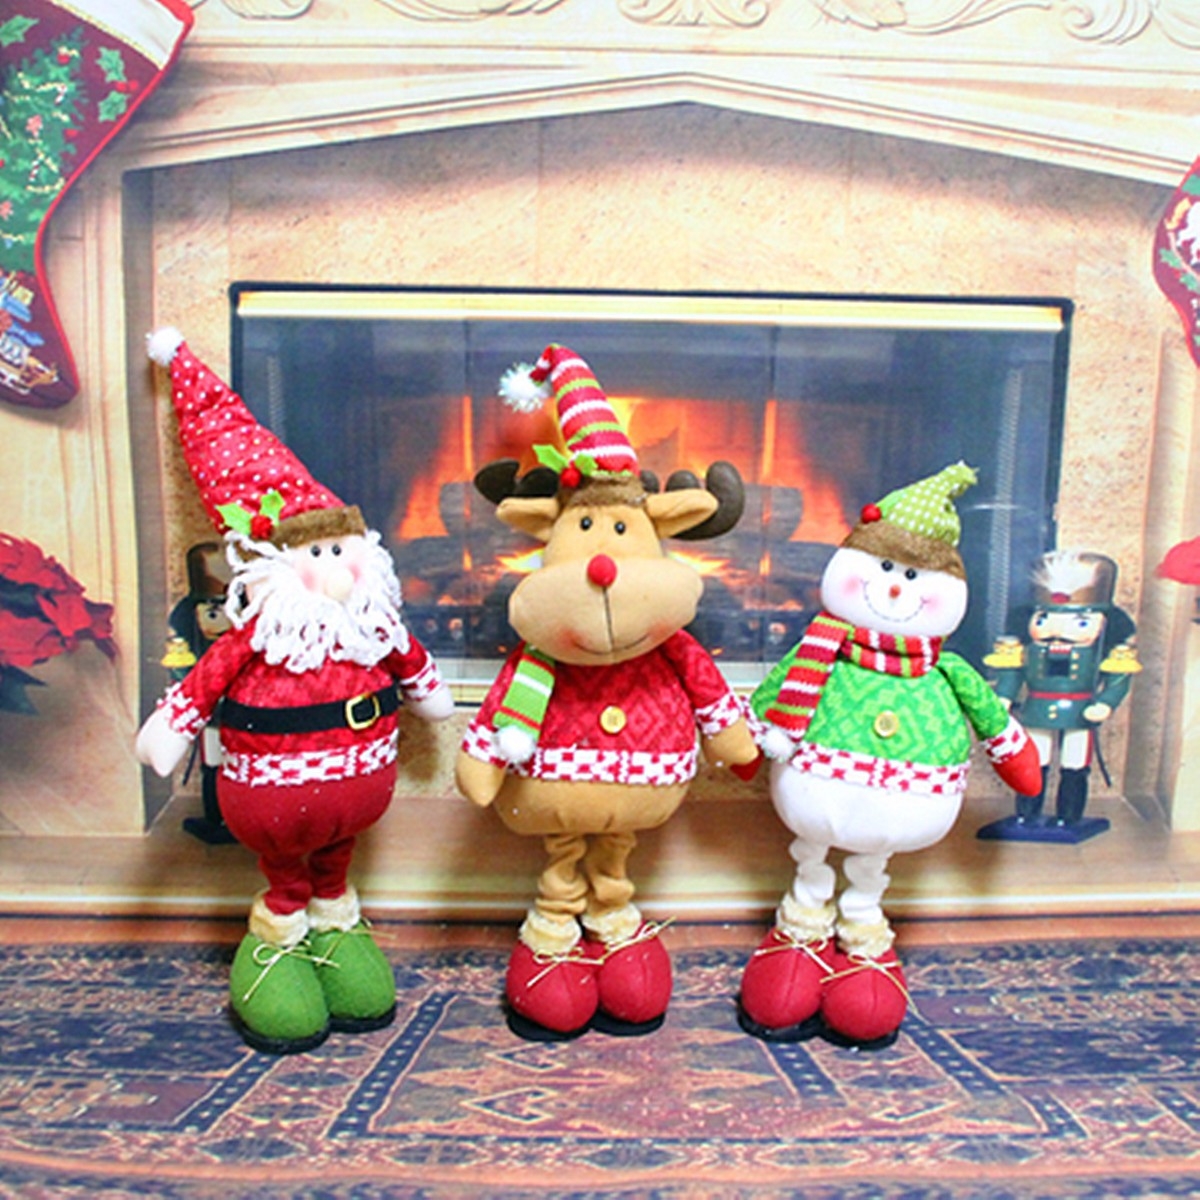 Cute Christmas Idol Toy Santa Claus Snowman Deer Ornaments Gift Xmas Home Decor